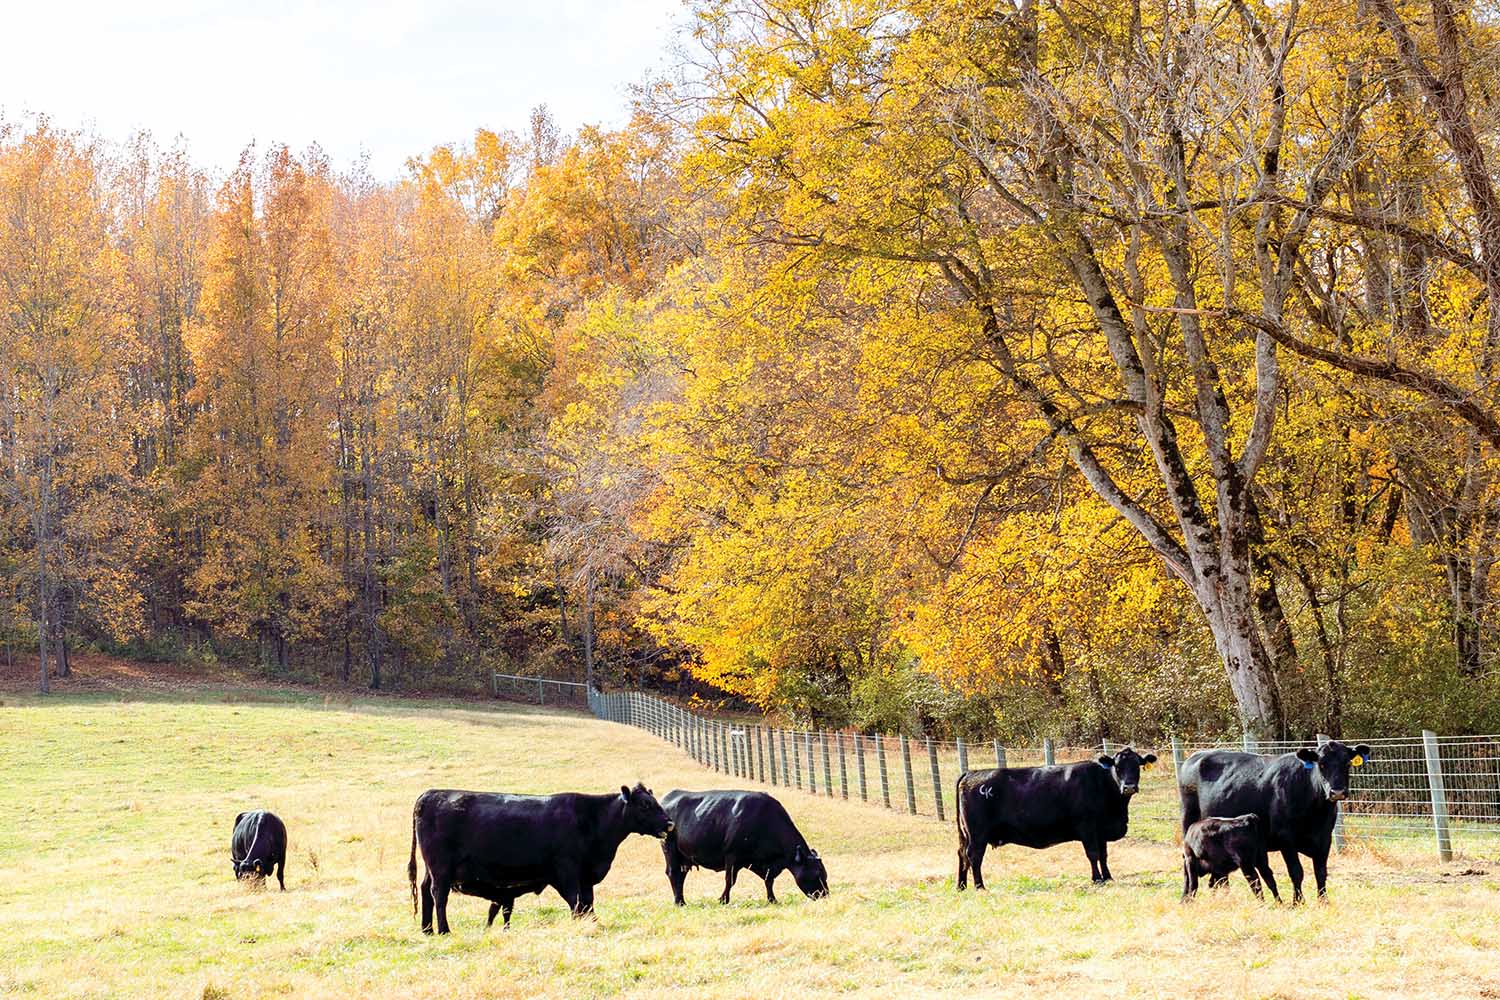 Black cattle roam a grassy field among yellow trees